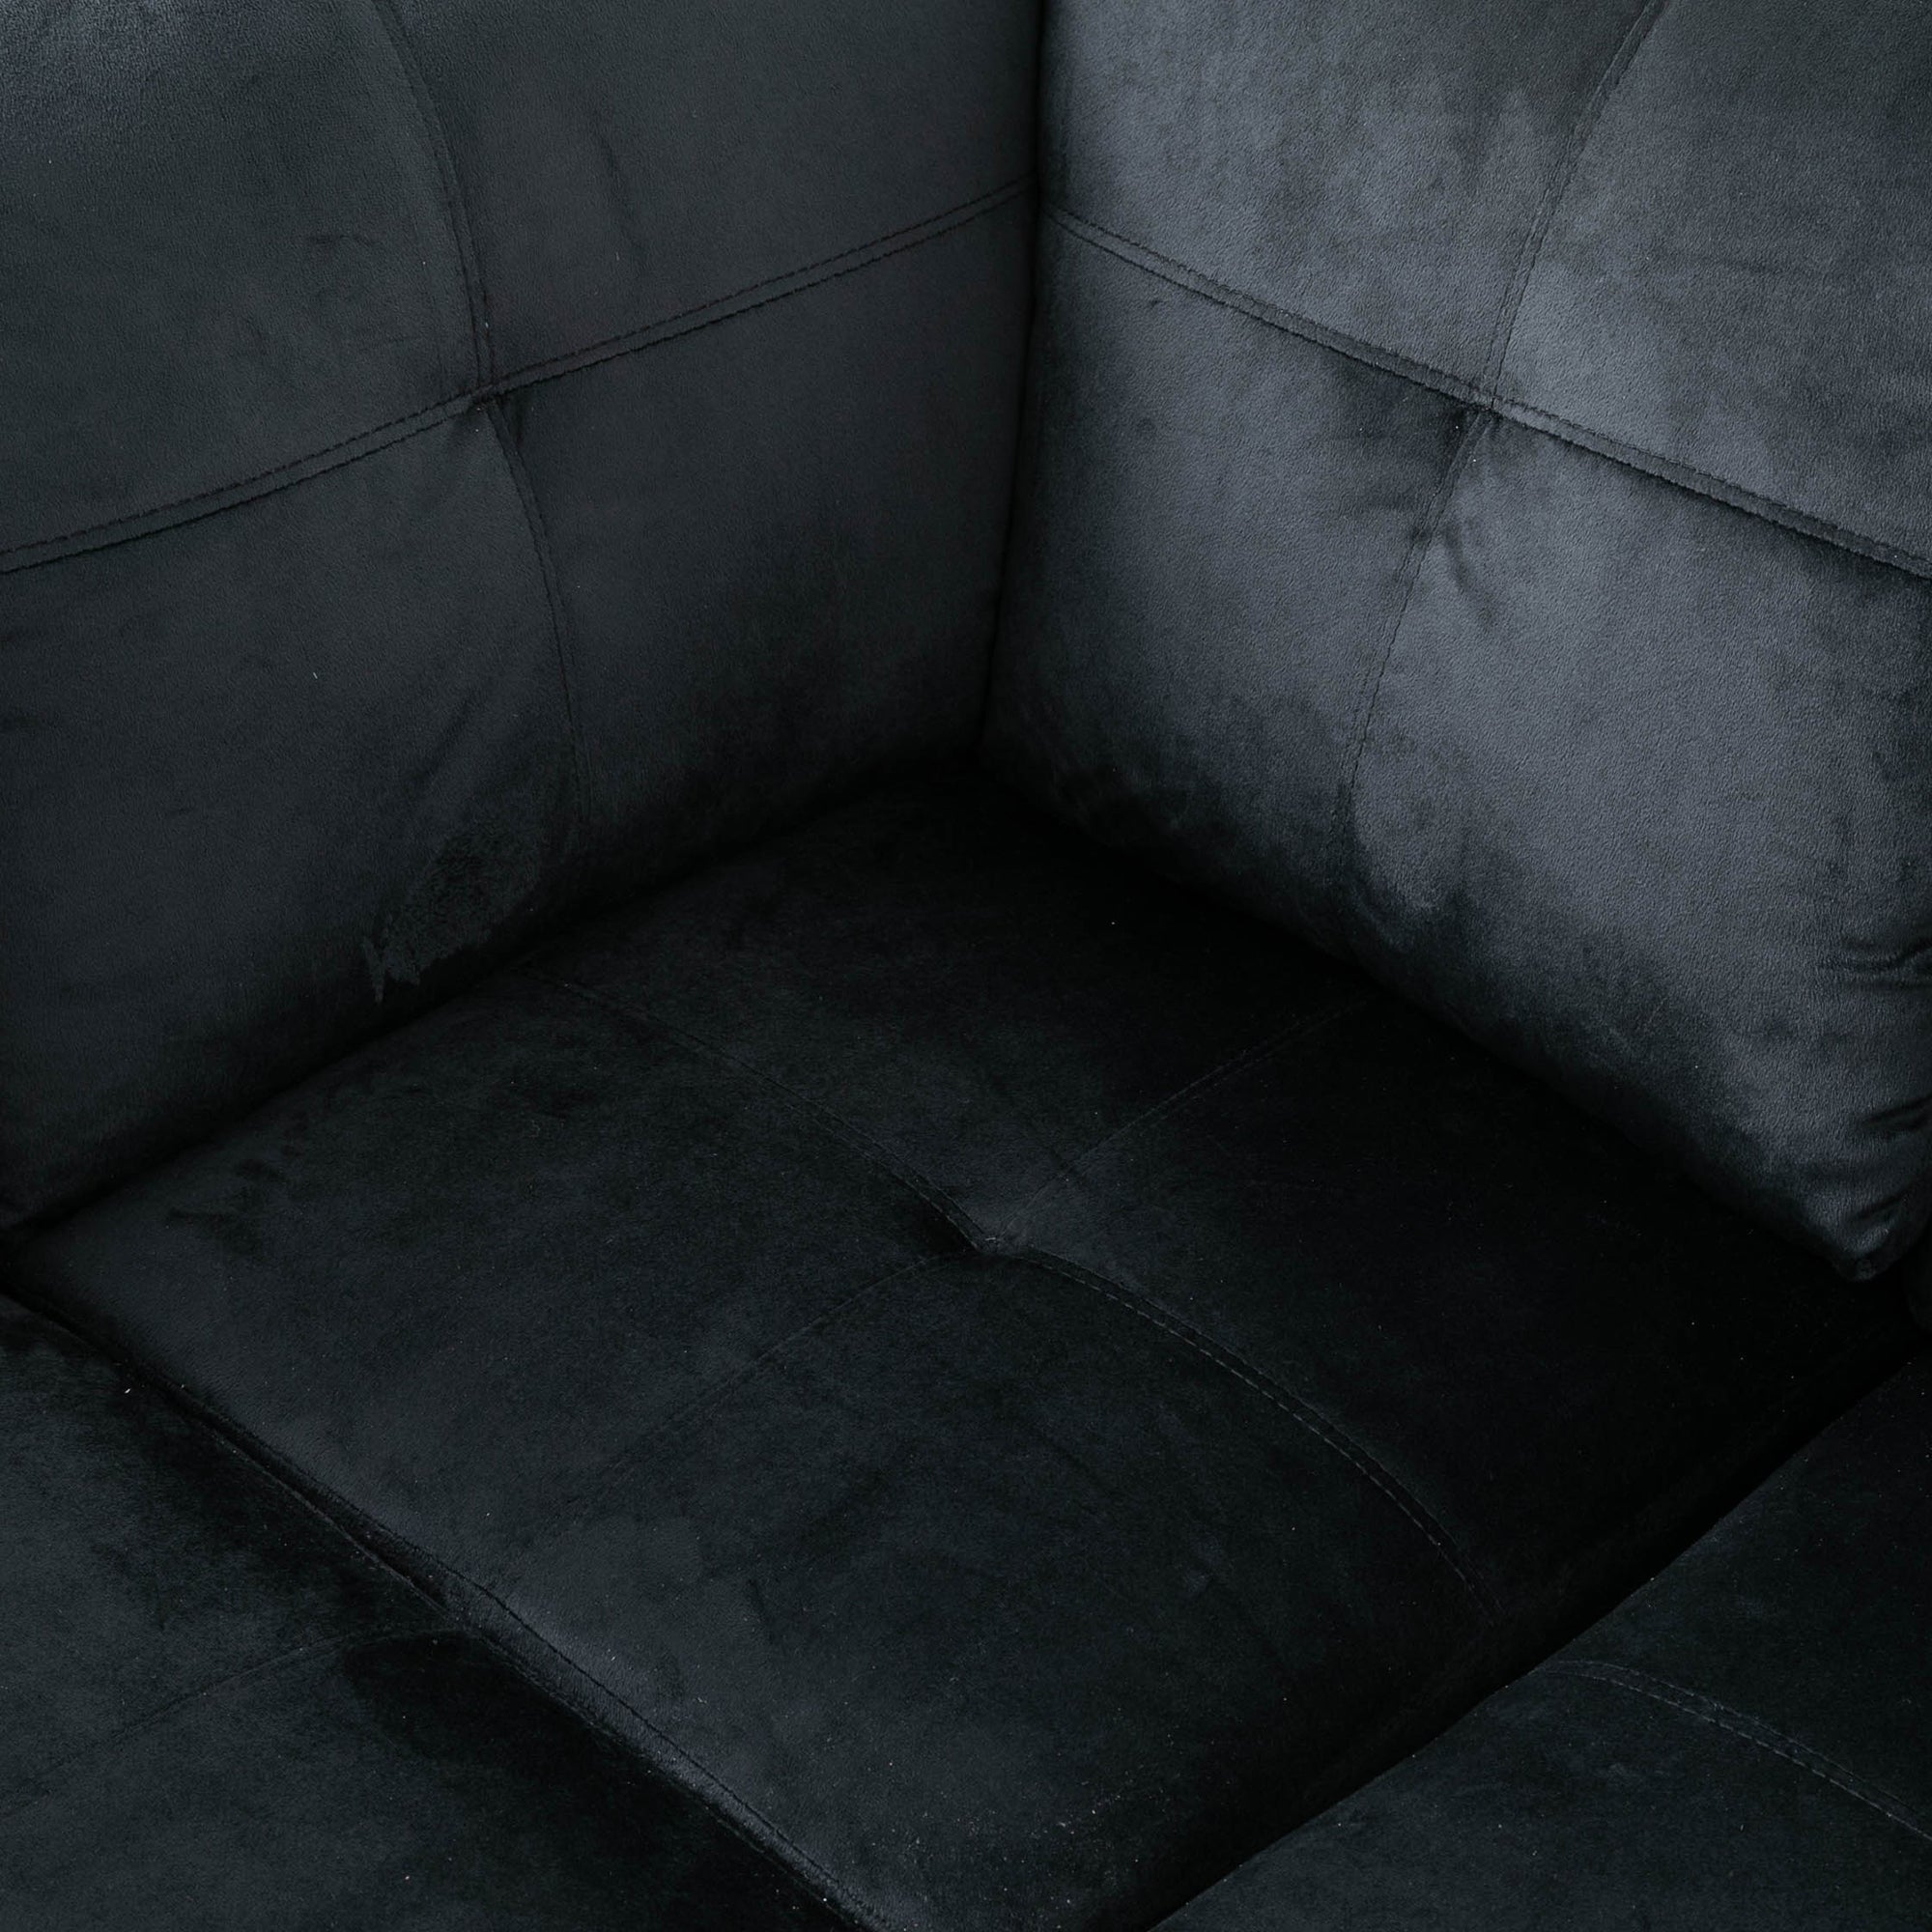 Ainehome Black L-shaped Flannel Sofa Set